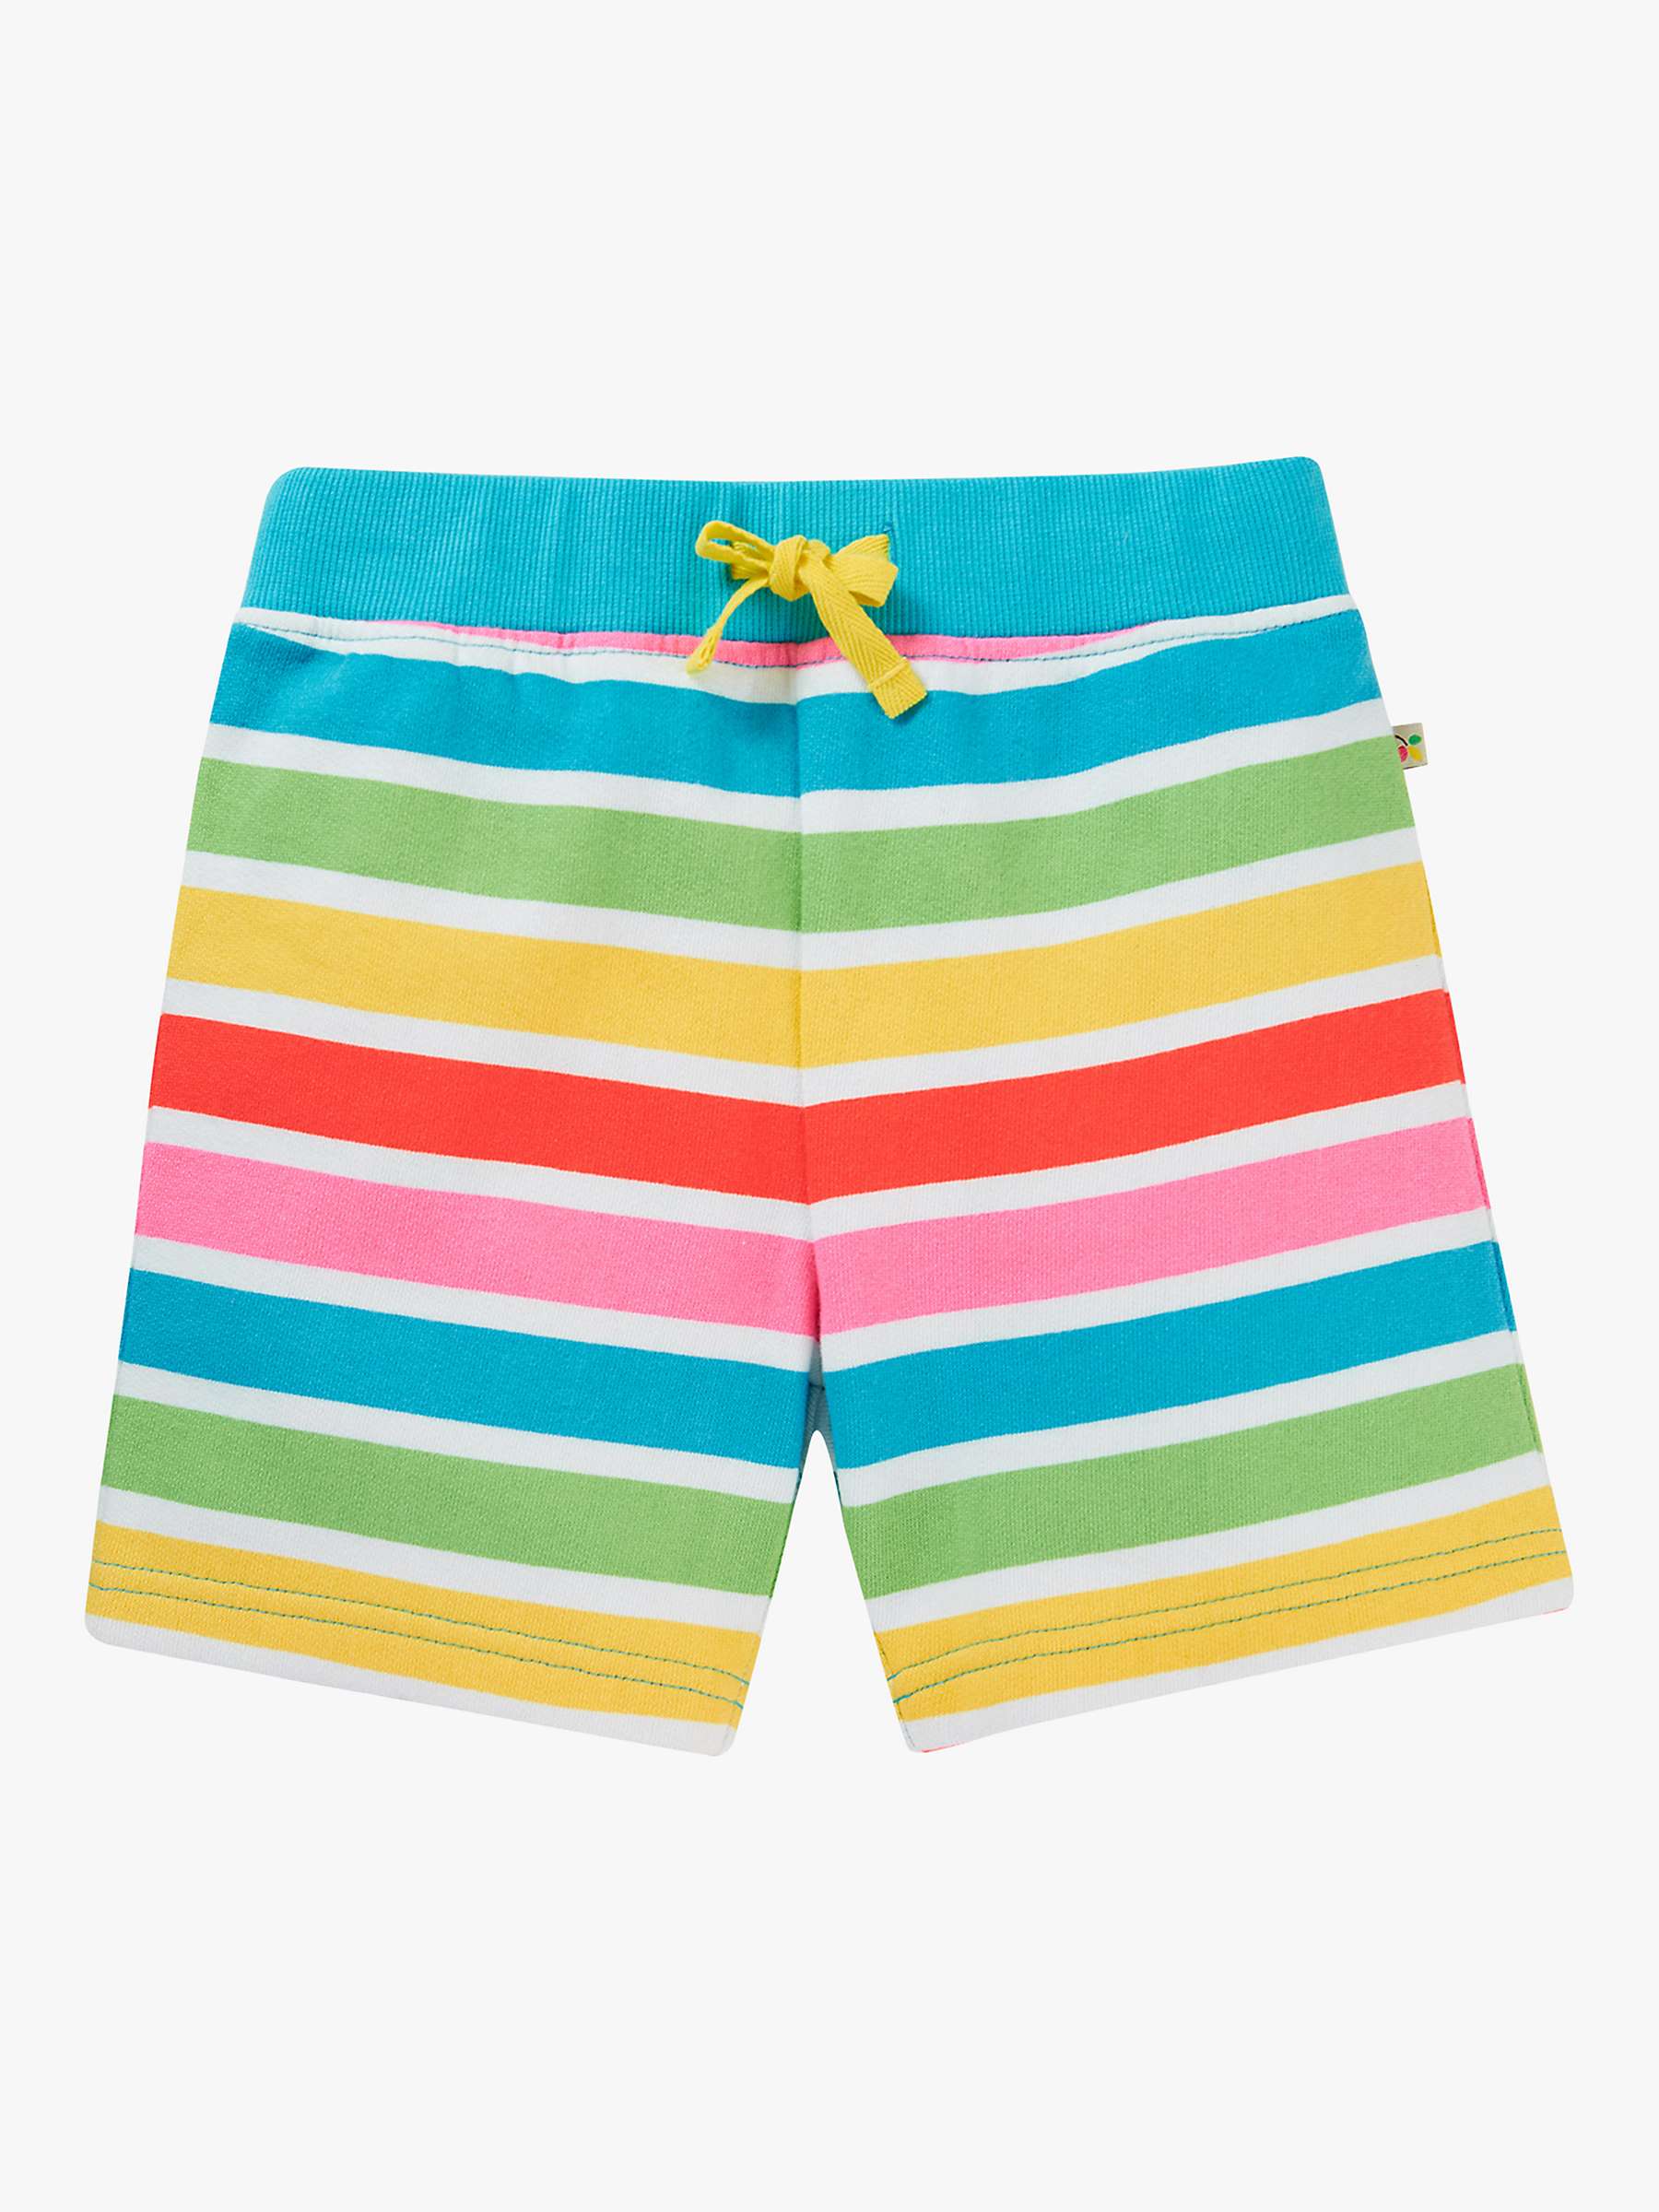 Buy Frugi Kids' Switch Sydney Rainbow Stripe Organic Cotton Shorts, Multi Online at johnlewis.com